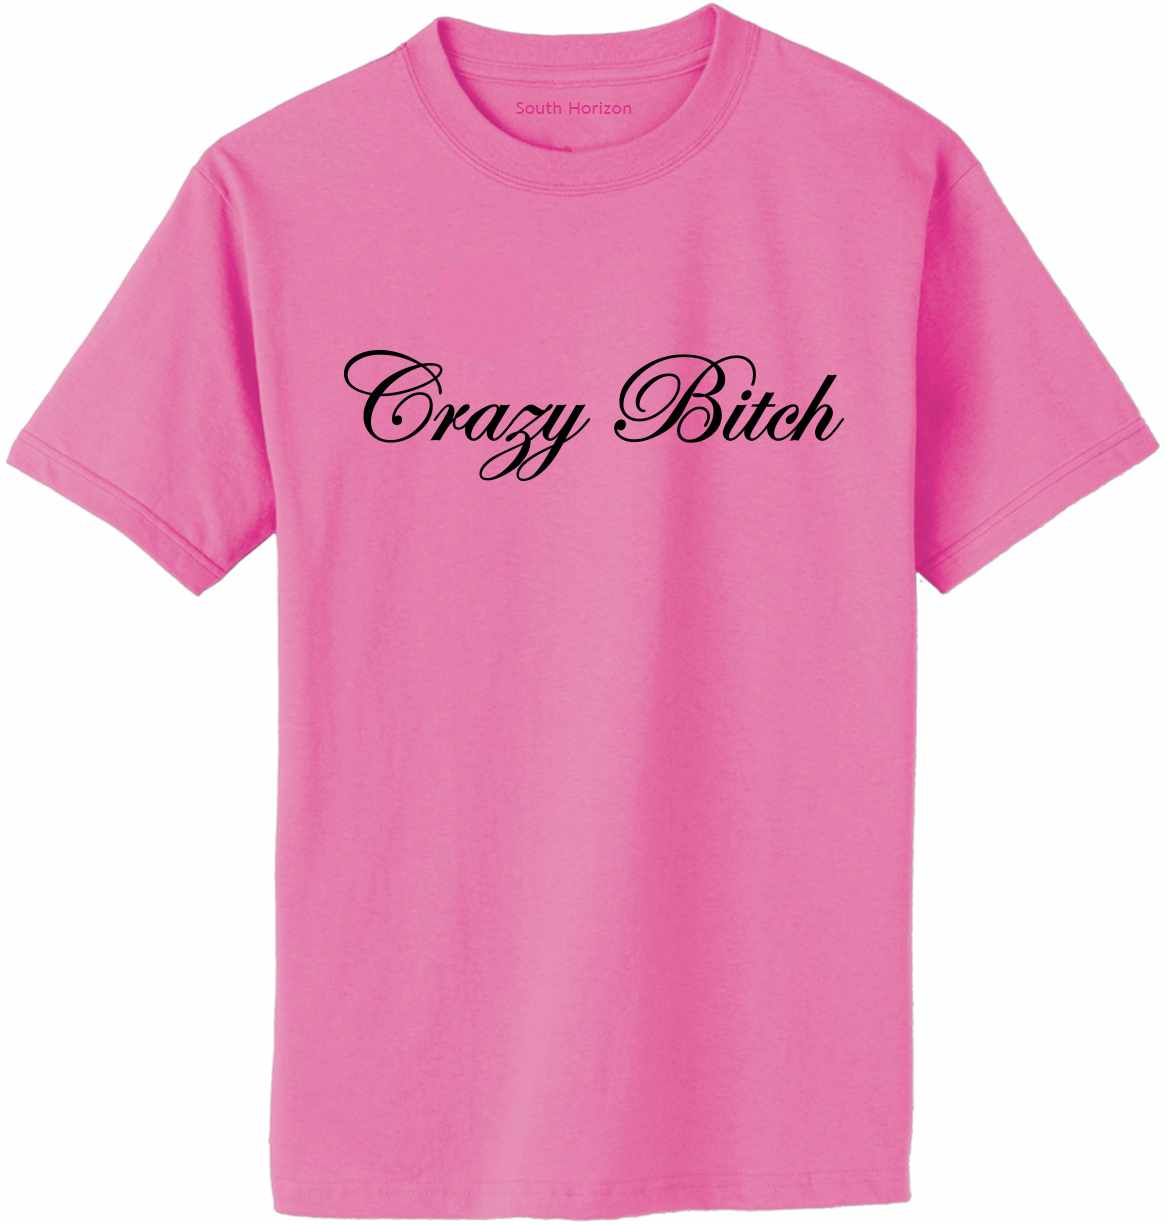 Crazy Bitch Adult T-Shirt